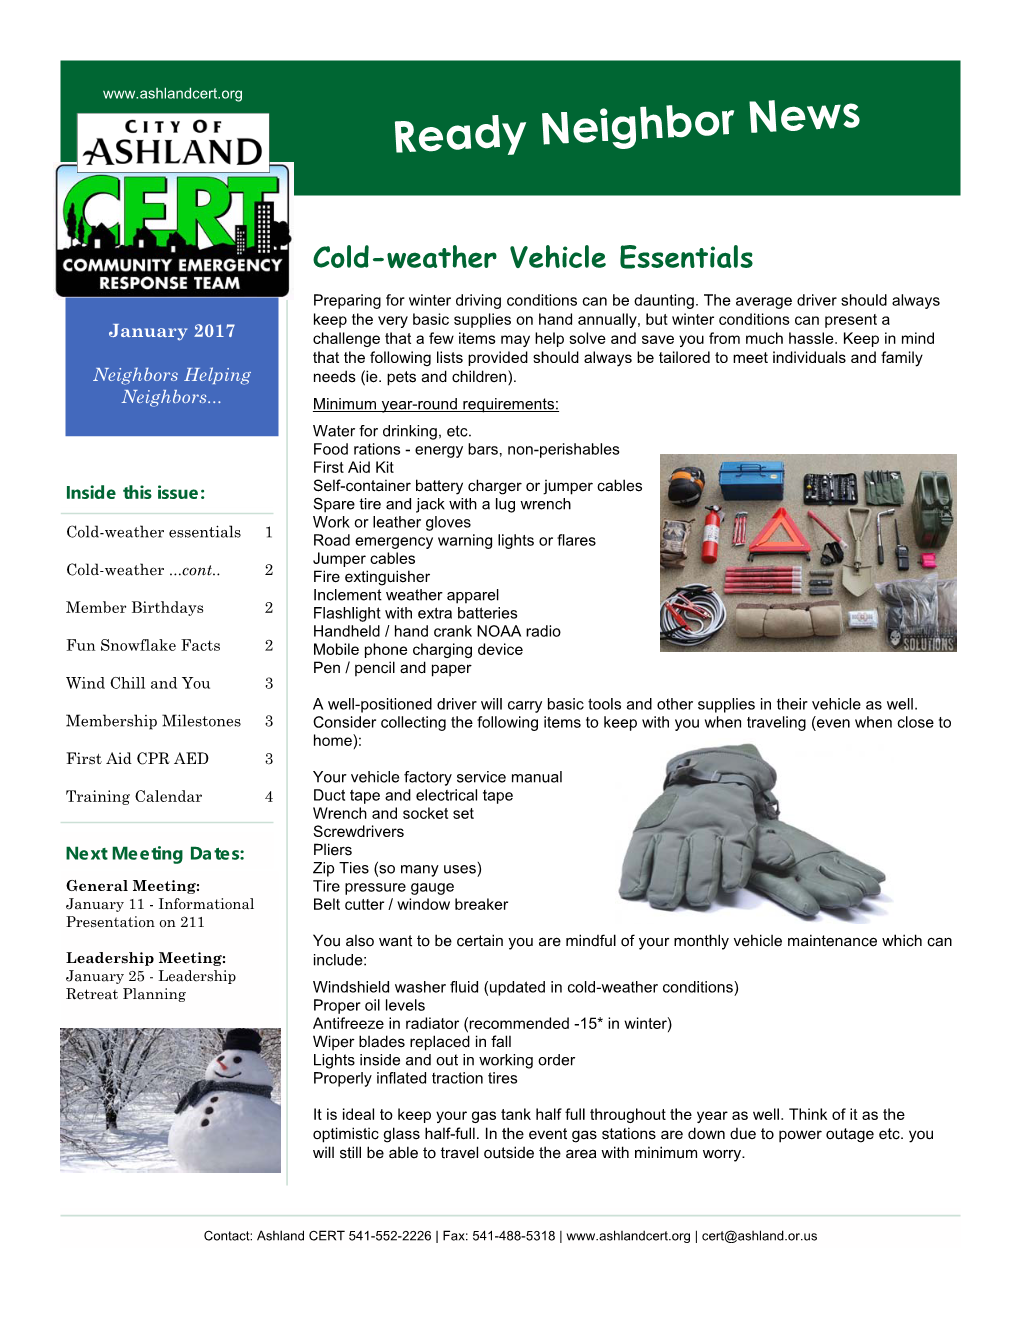 Cold-Weather Vehicle Essentials